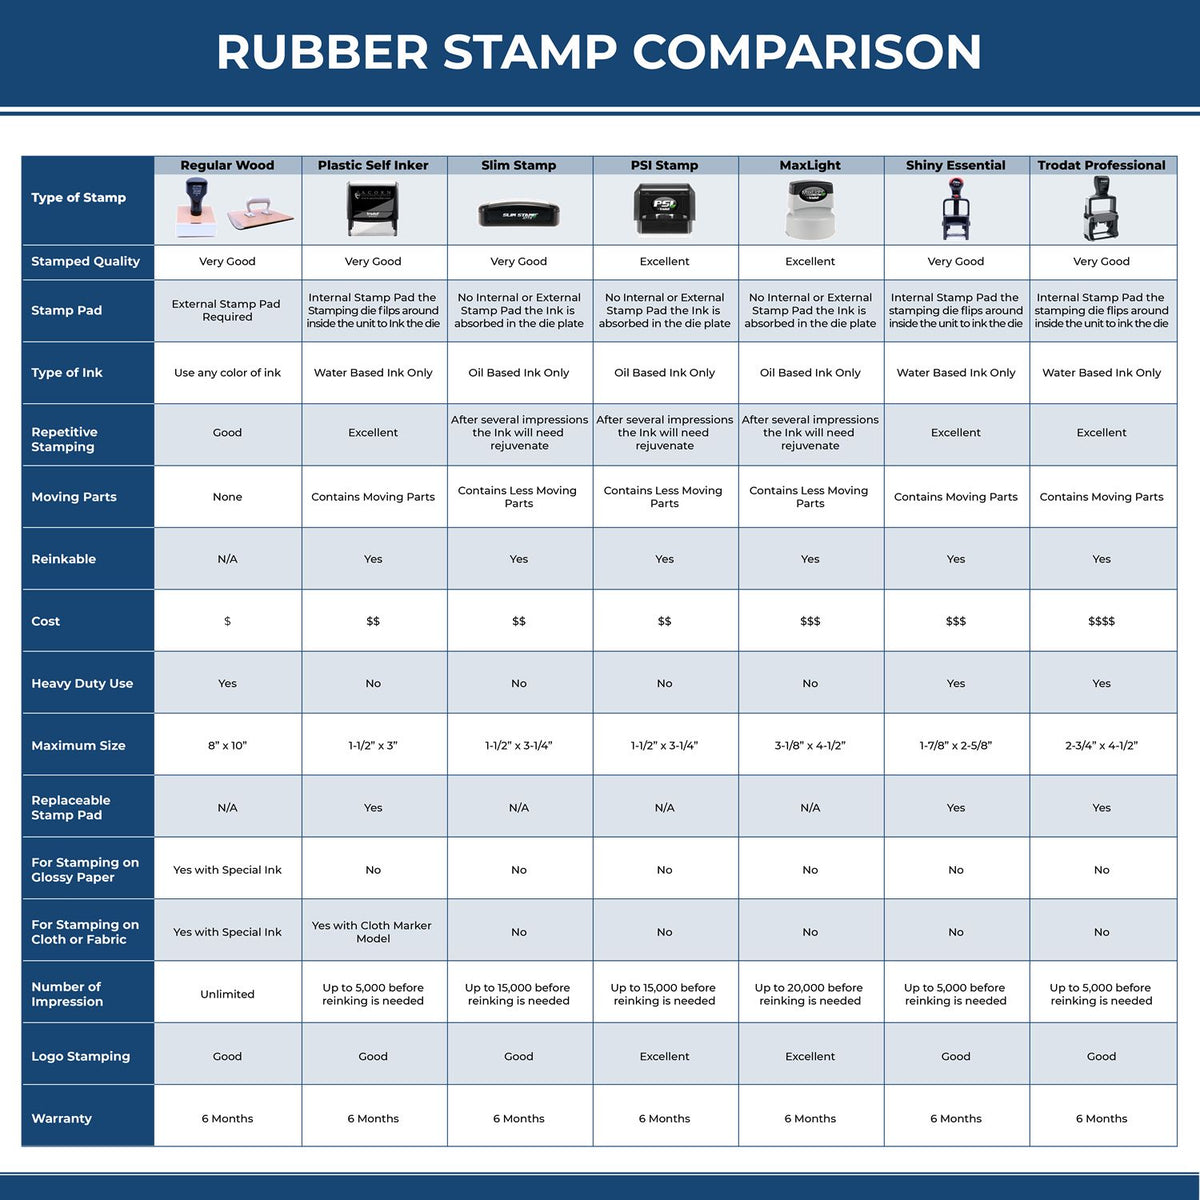 Return for Better Address Rubber Stamp 4445R Rubber Stamp Comparison